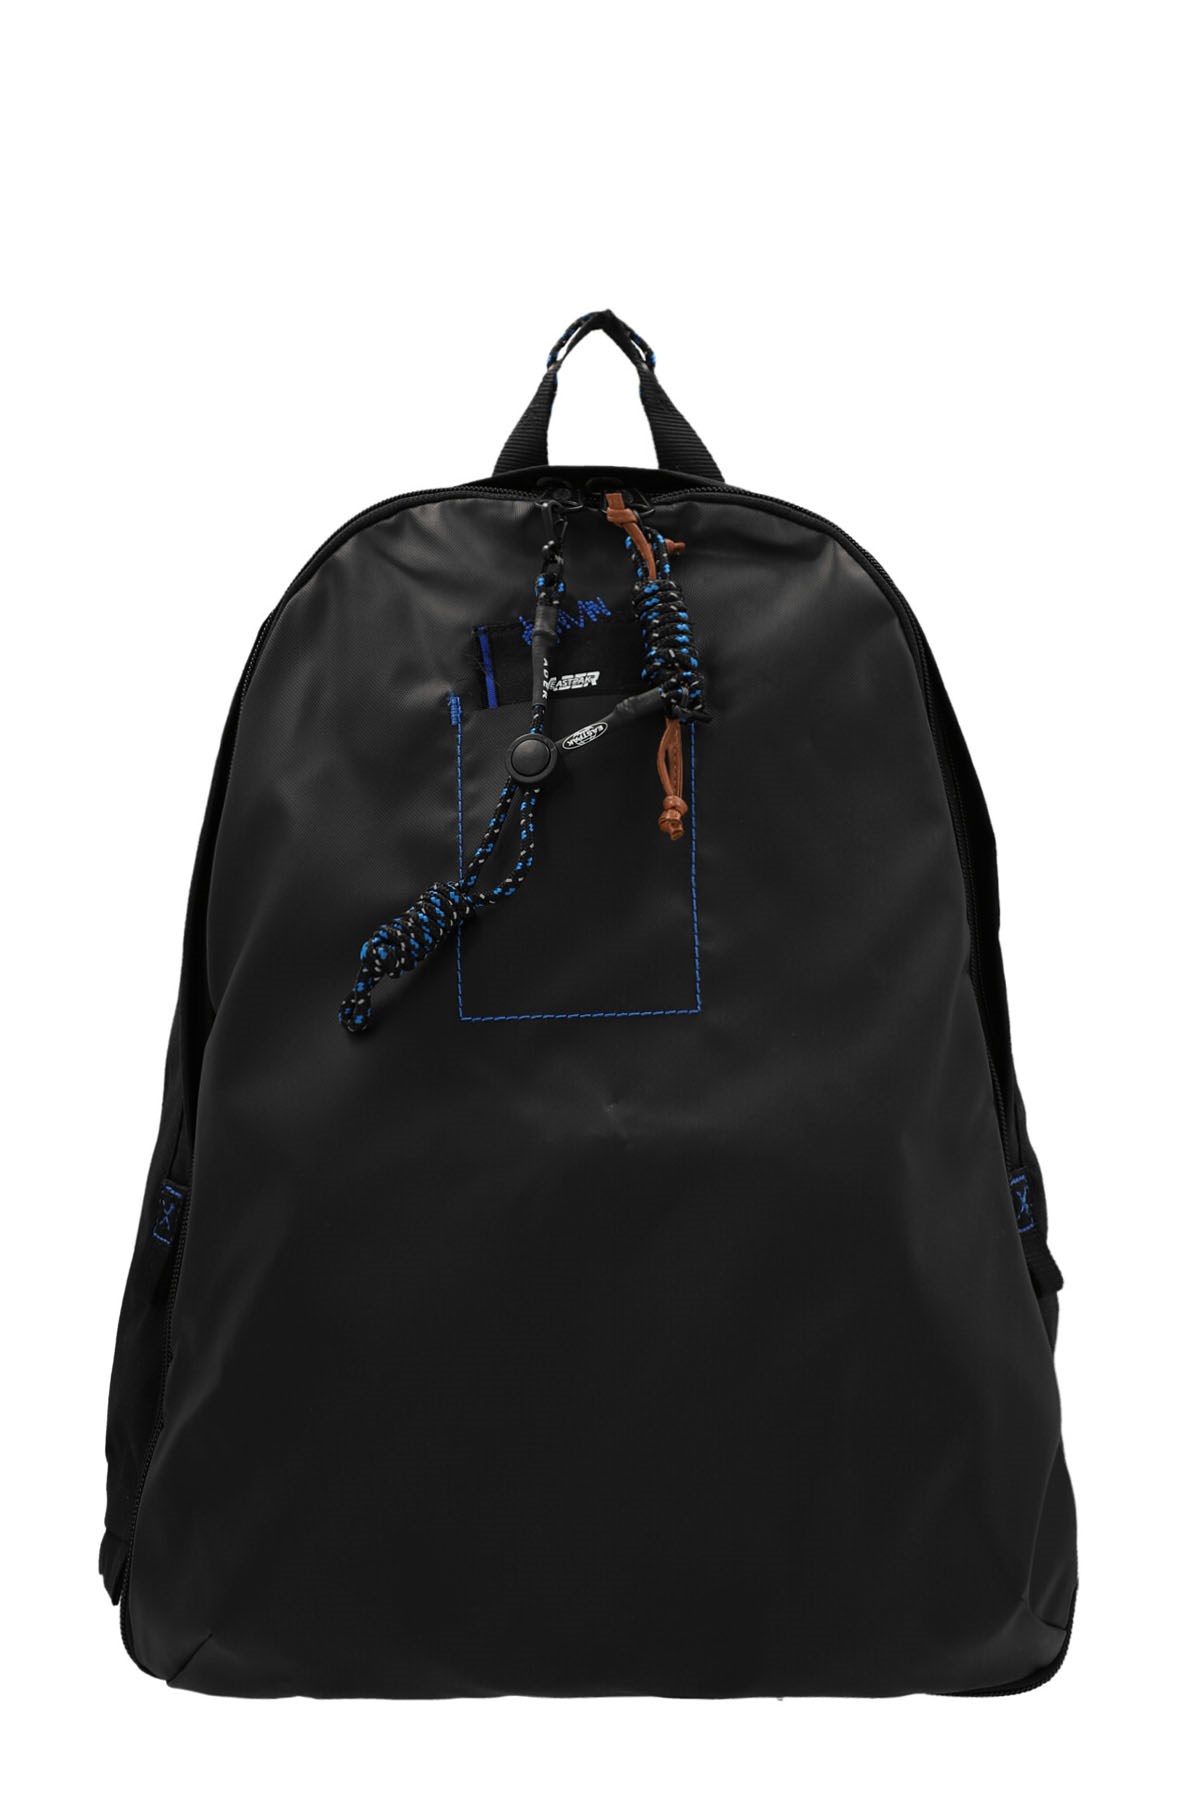 EASTPAK X Ader Error Capsule Backpack